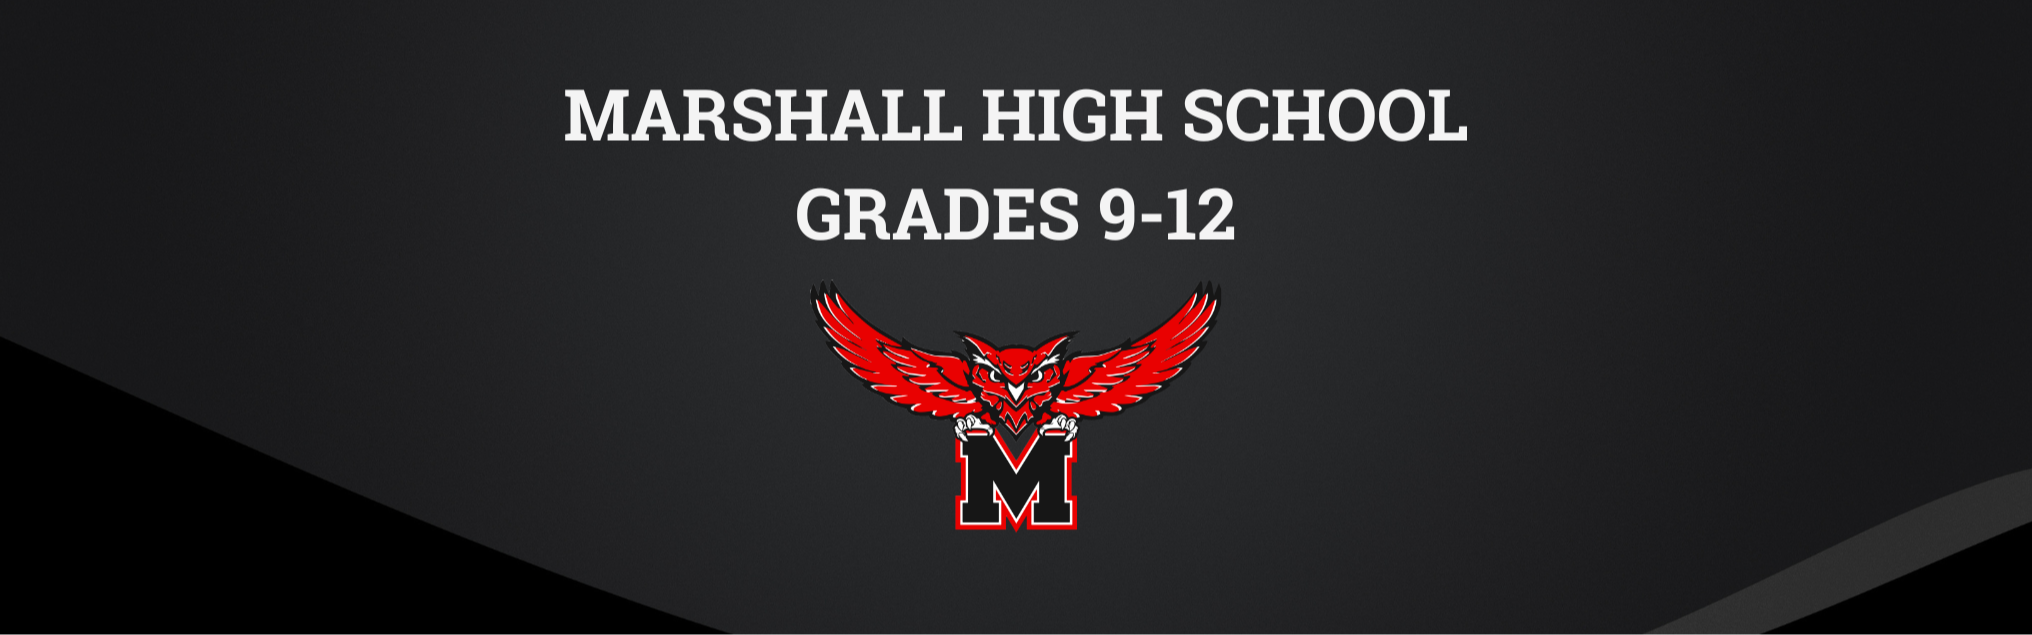 marshall high school